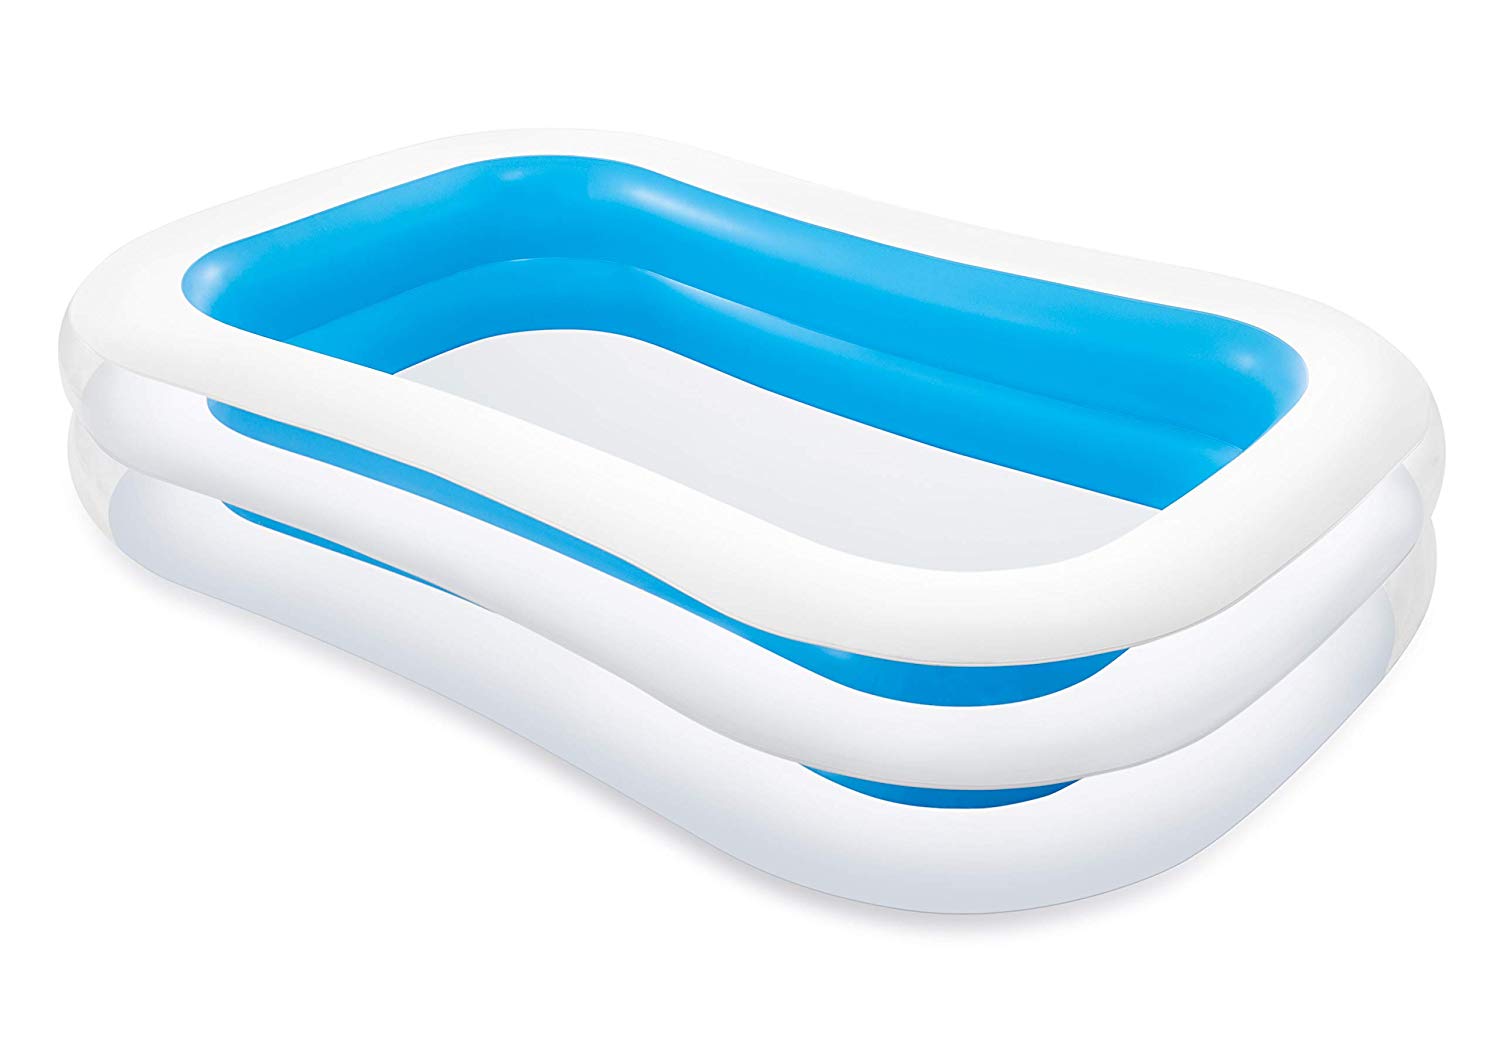 Intex Swim Center Vinyl Inflatable Pool, 103-Inch